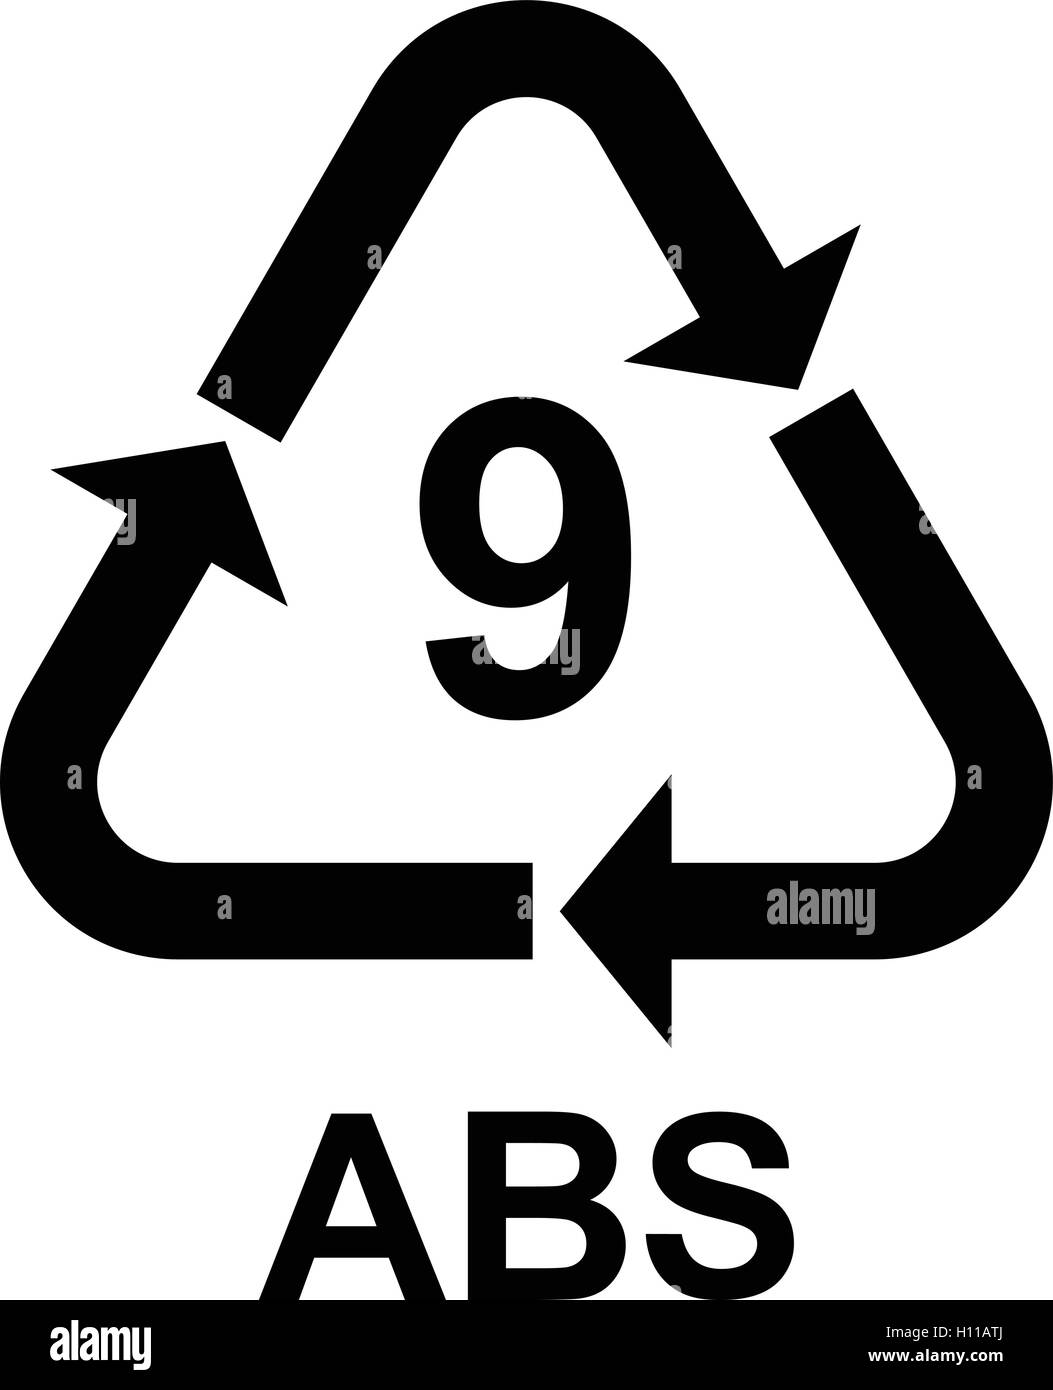 9 ab 42. Знак утилизации вектор. Вектор 5 ПП вектор 9. ABS 9. Коды переработки вектор.